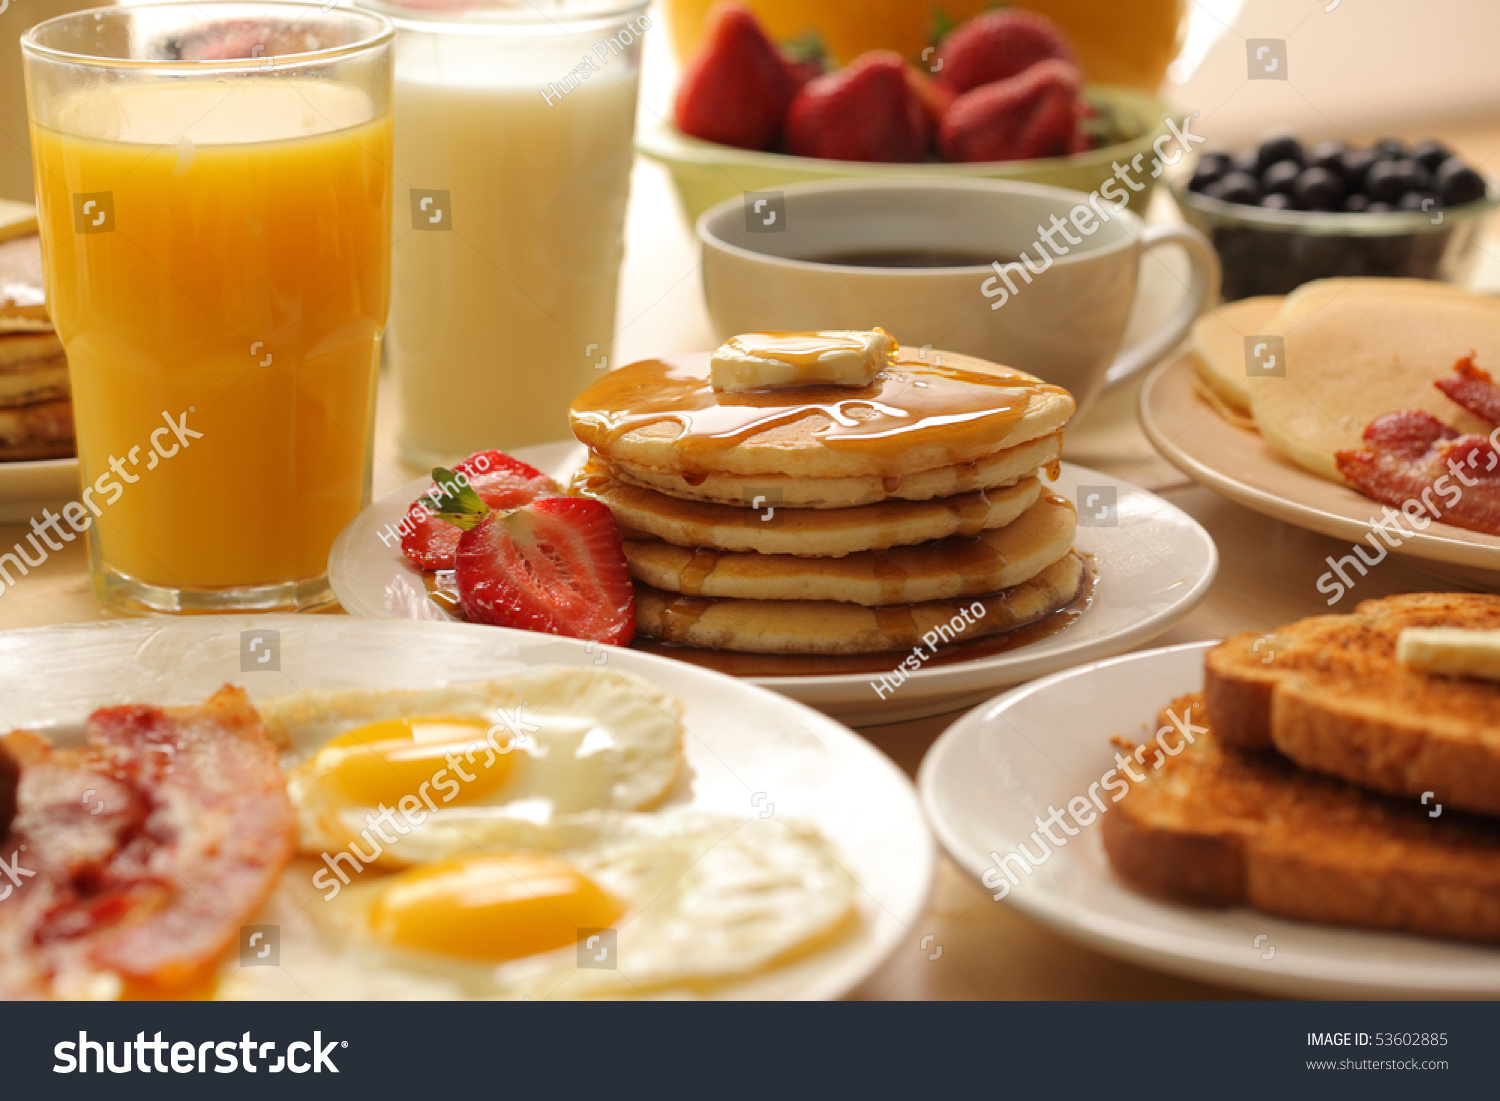 Breakfast Foods Stock Photo 53602885 : Shutterstock